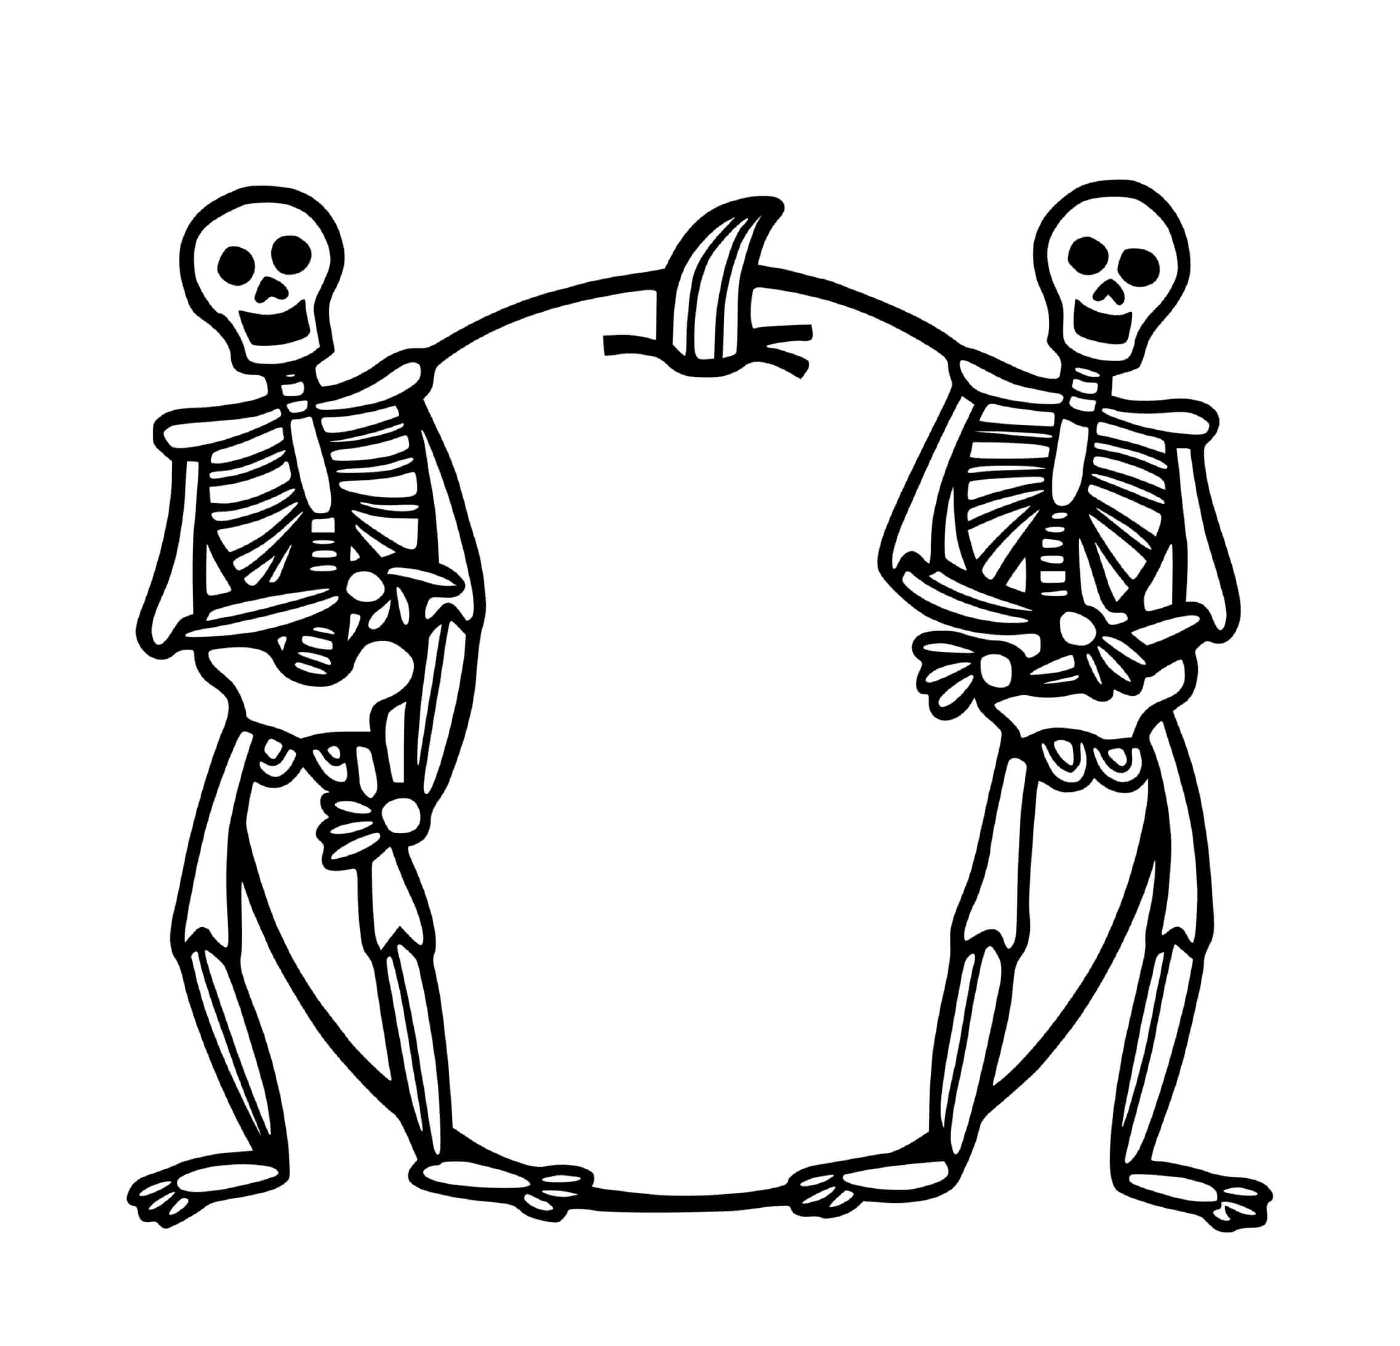  Хэллоуин, скелет, стоящий у руки 